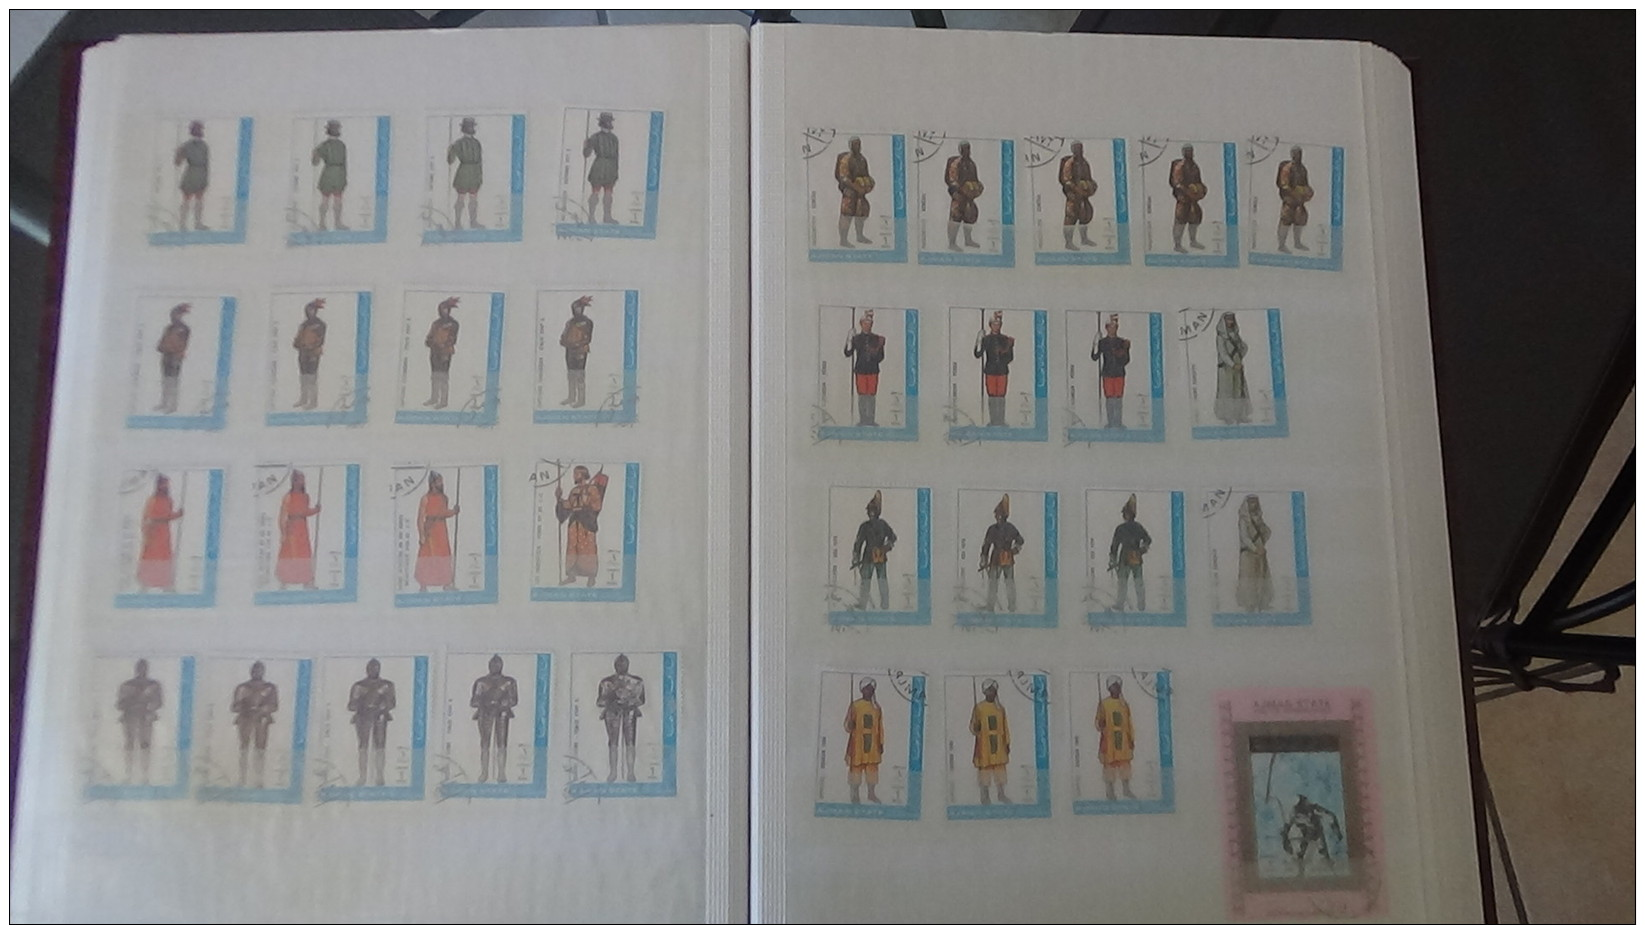 C Gros carton  lot variétés (1800euros) + 2 bandes ND + timbres France ** + obl + Chine + classeurs + albums timbres obl